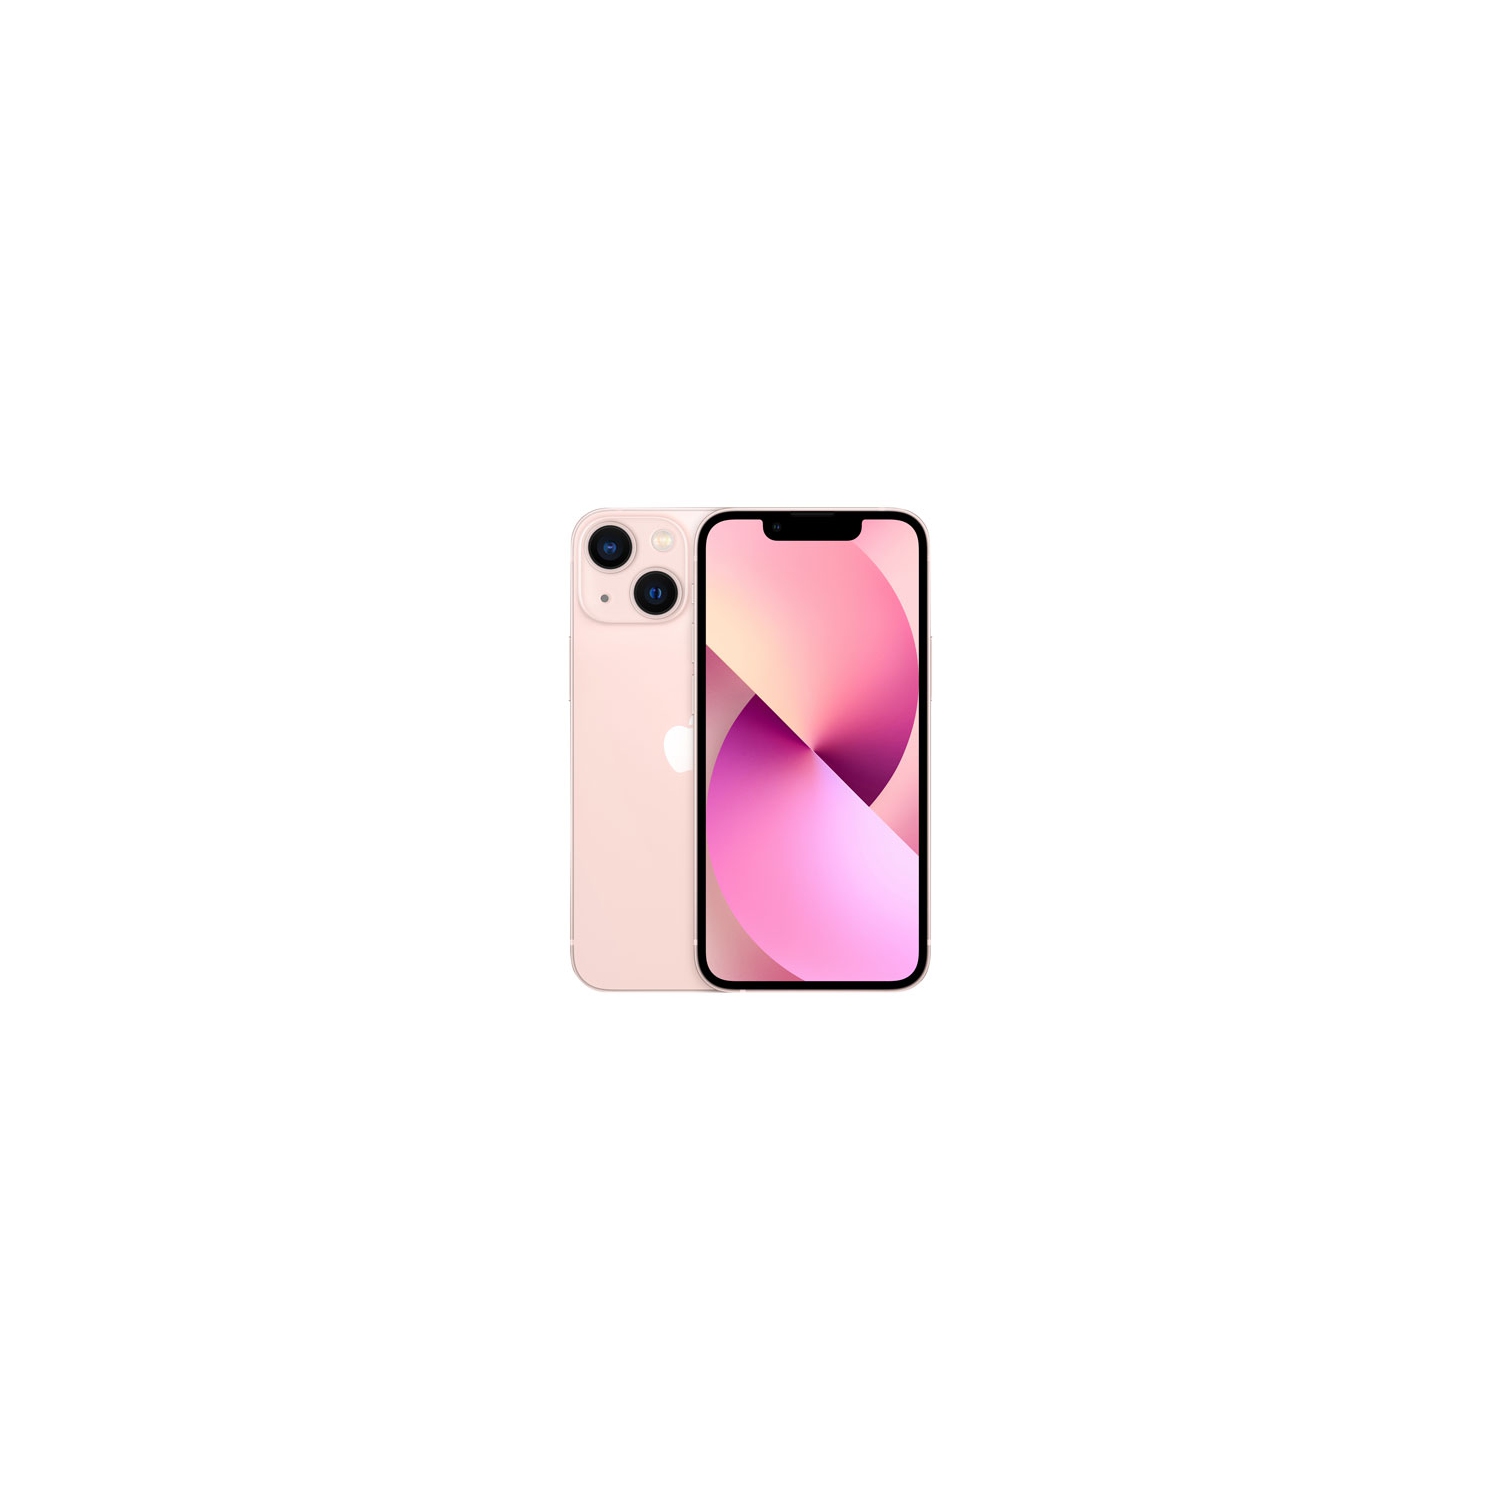 Apple iPhone 13 mini 256GB - Pink - Unlocked - Open Box